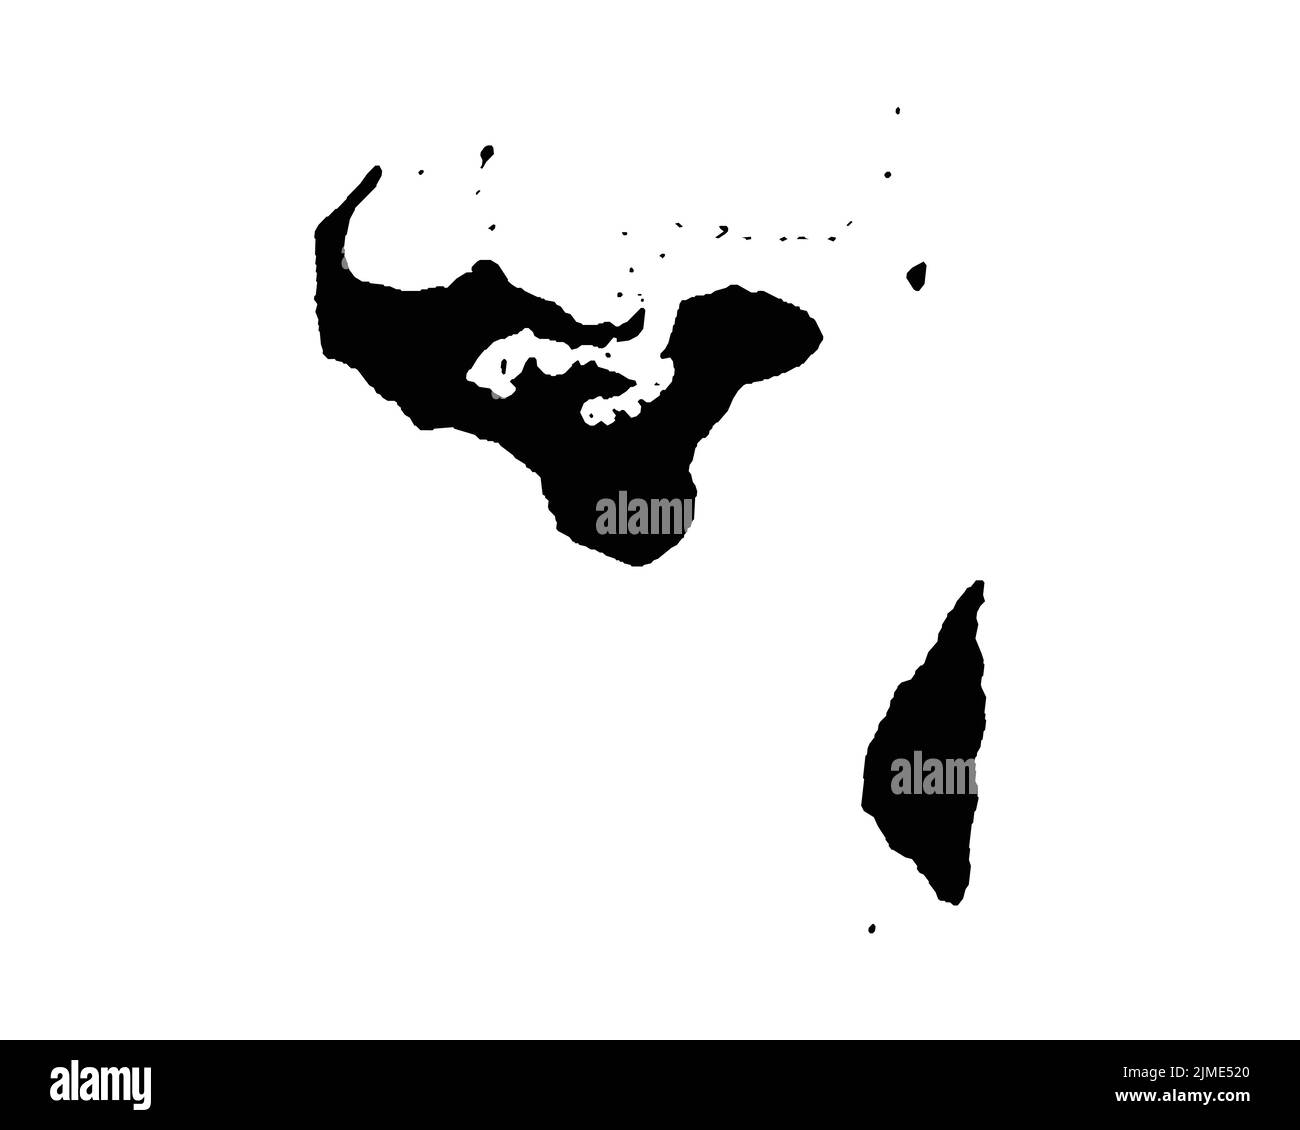 Tonga-Karte. Tongan Country Map. Schwarz-Weiß-Nationalgeographie Umriss Grenze Grenzgebiet Form Vektor Illustration EPS Clipart Stock Vektor